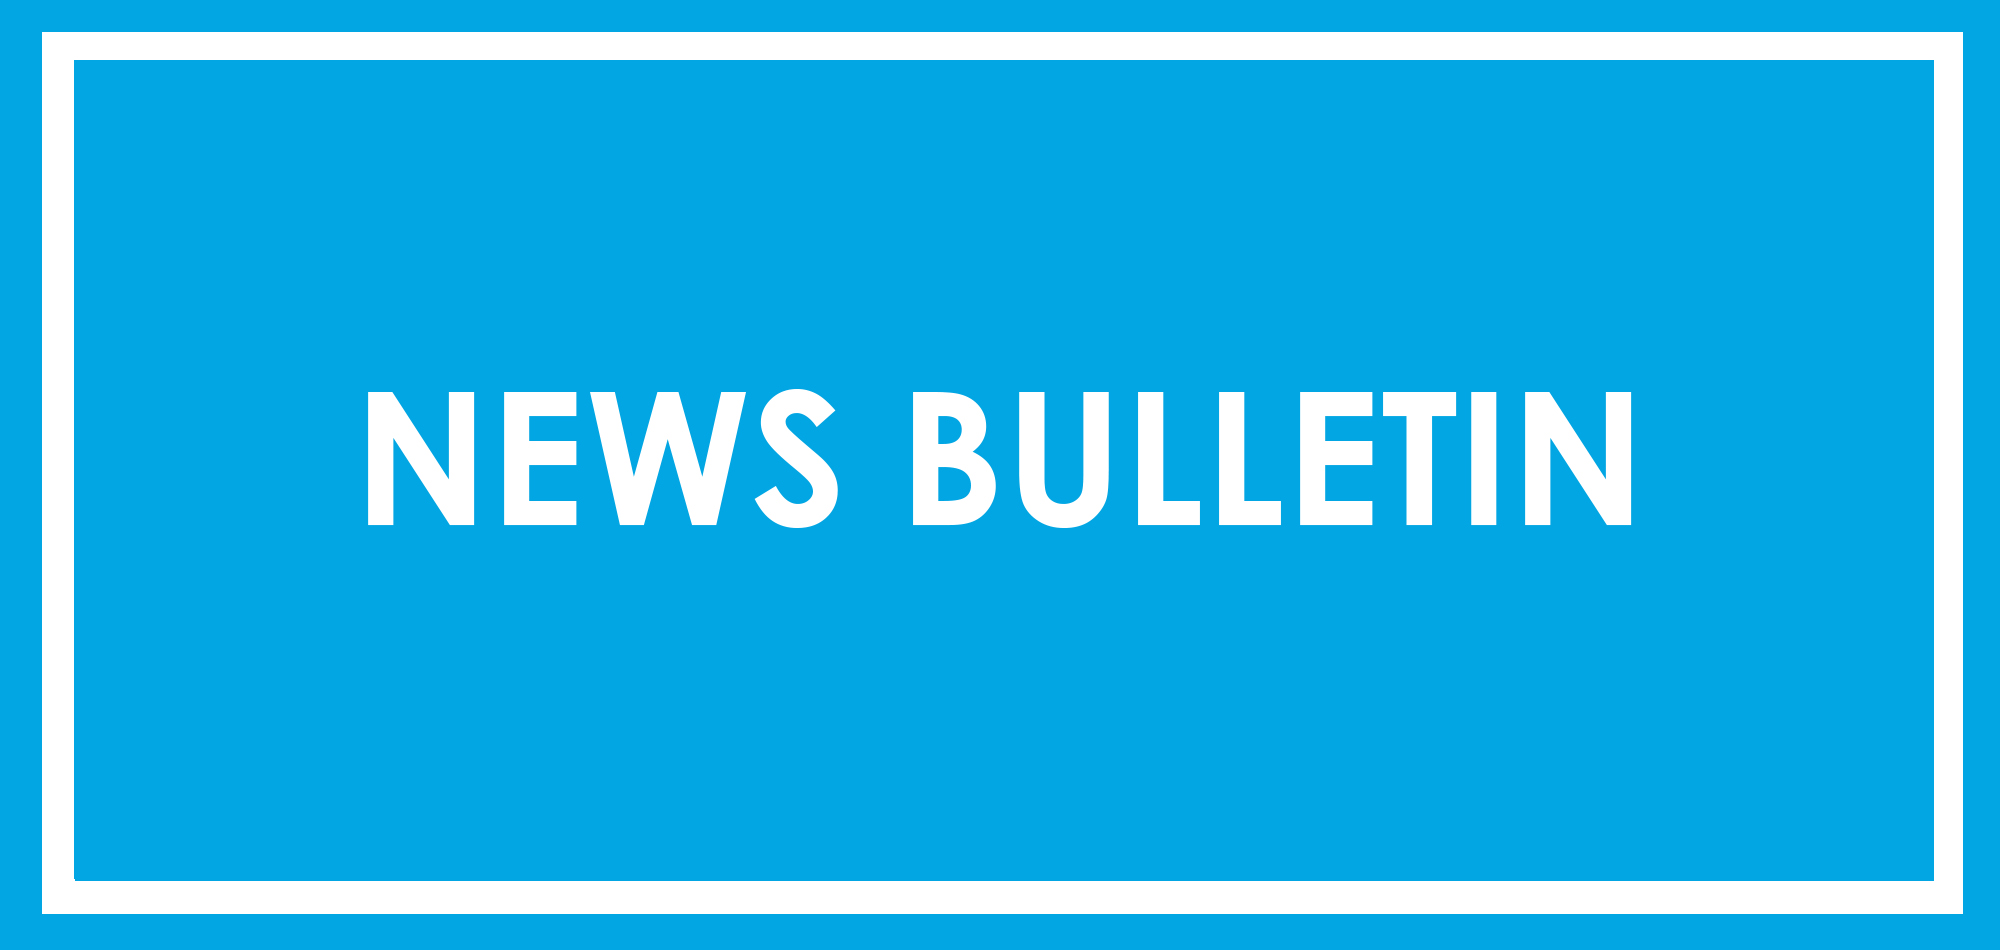 News Bulletin - 15.07.20